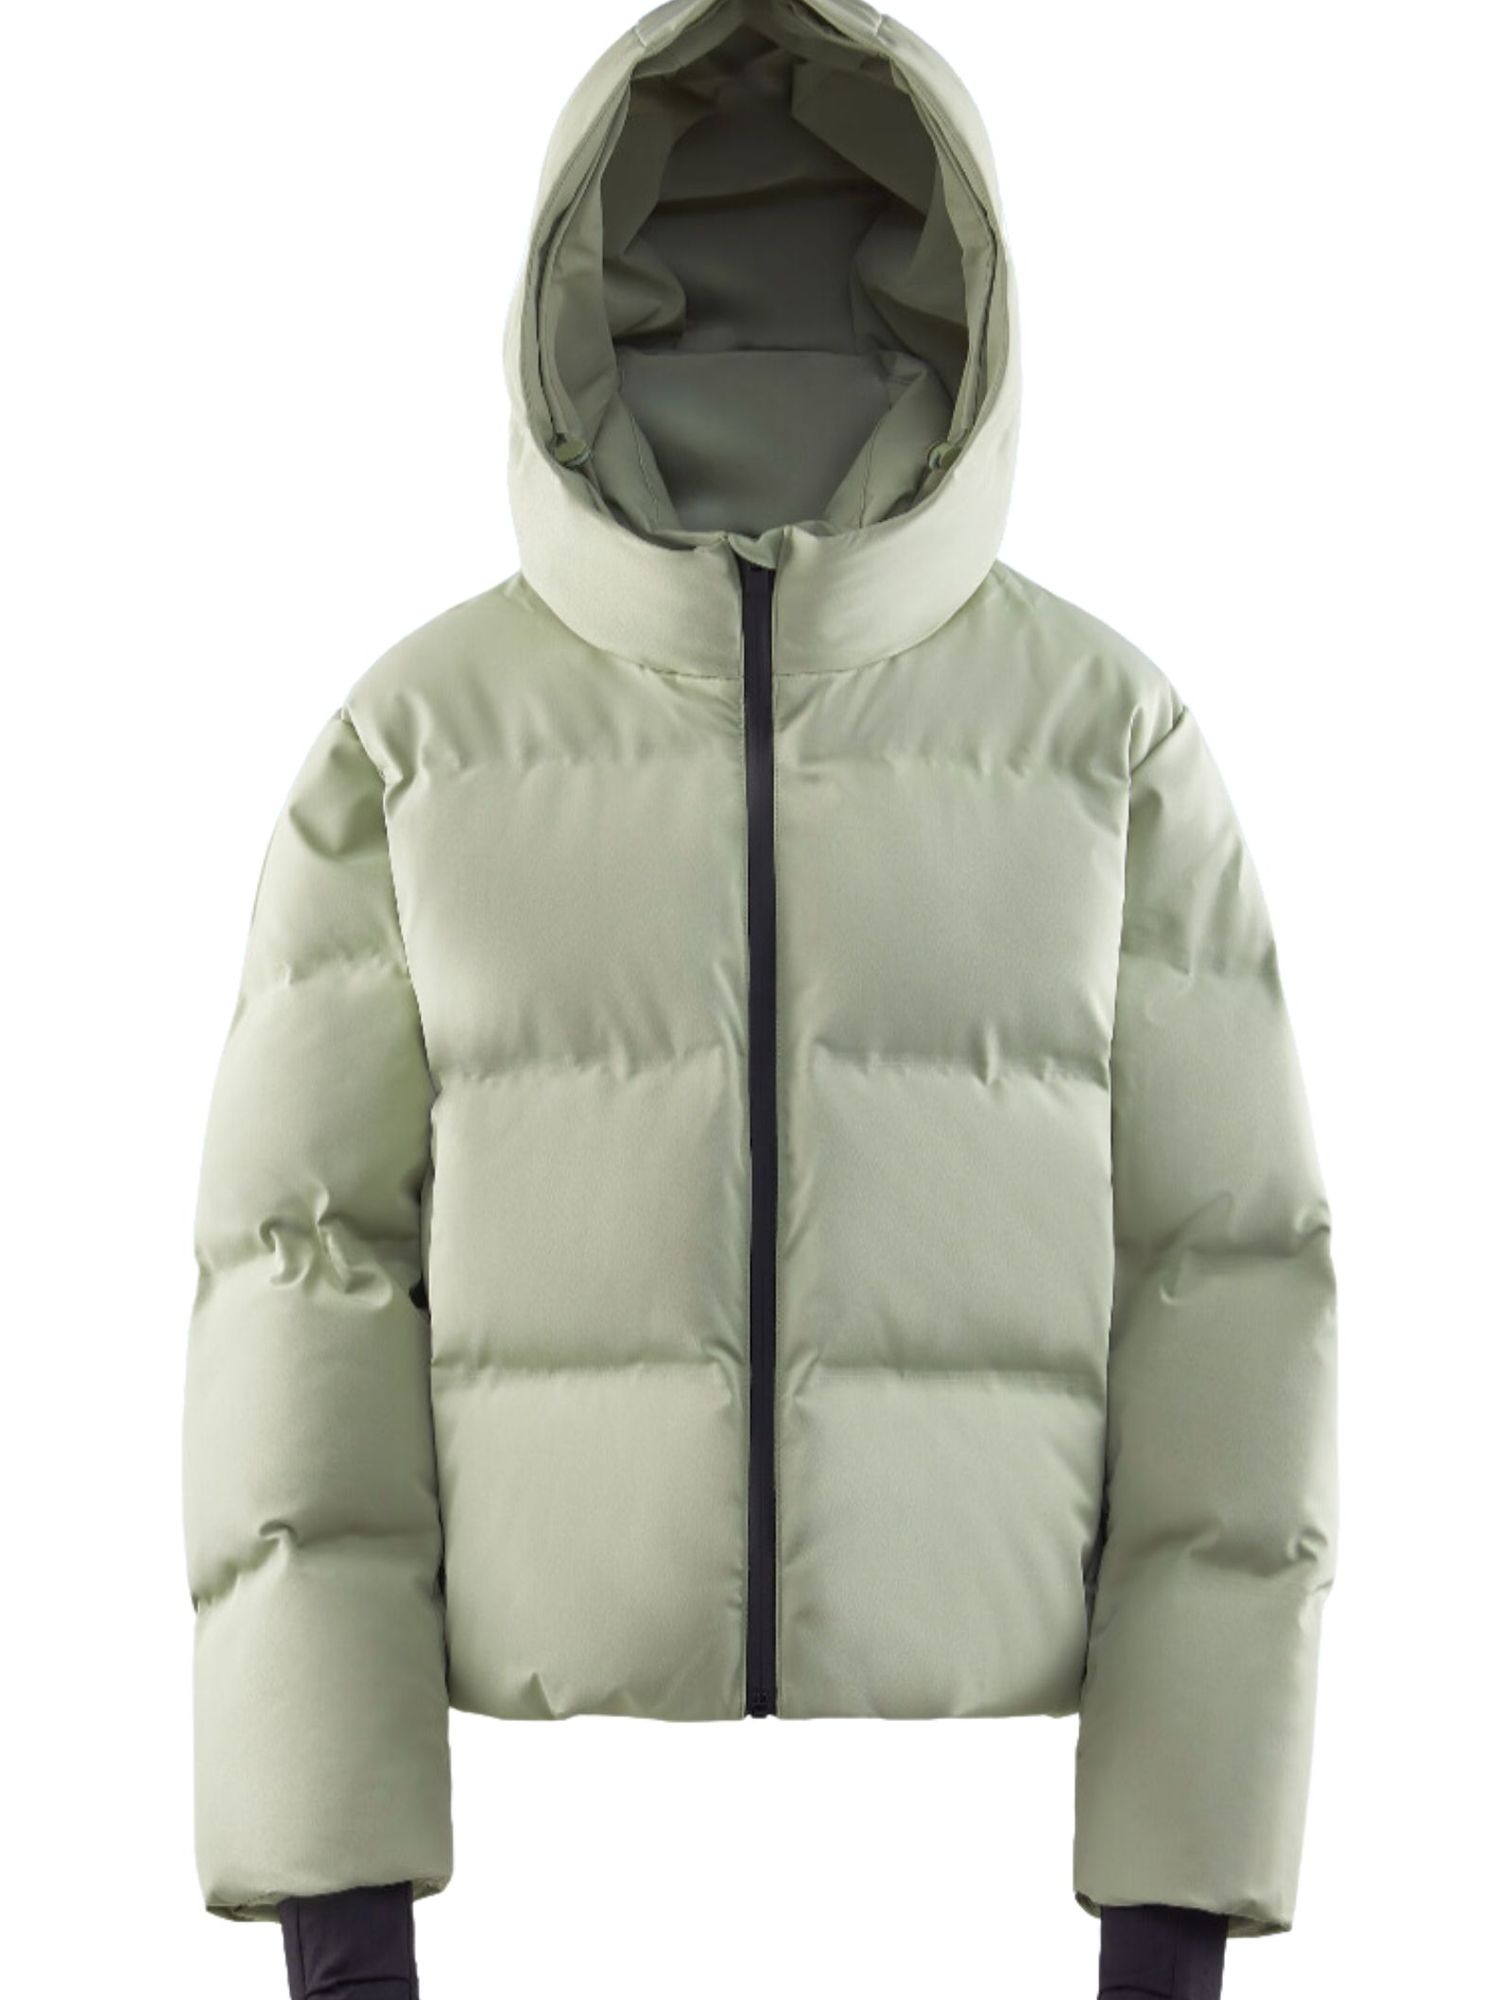 The 16 best ski jackets to shop now - Vogue Scandinavia